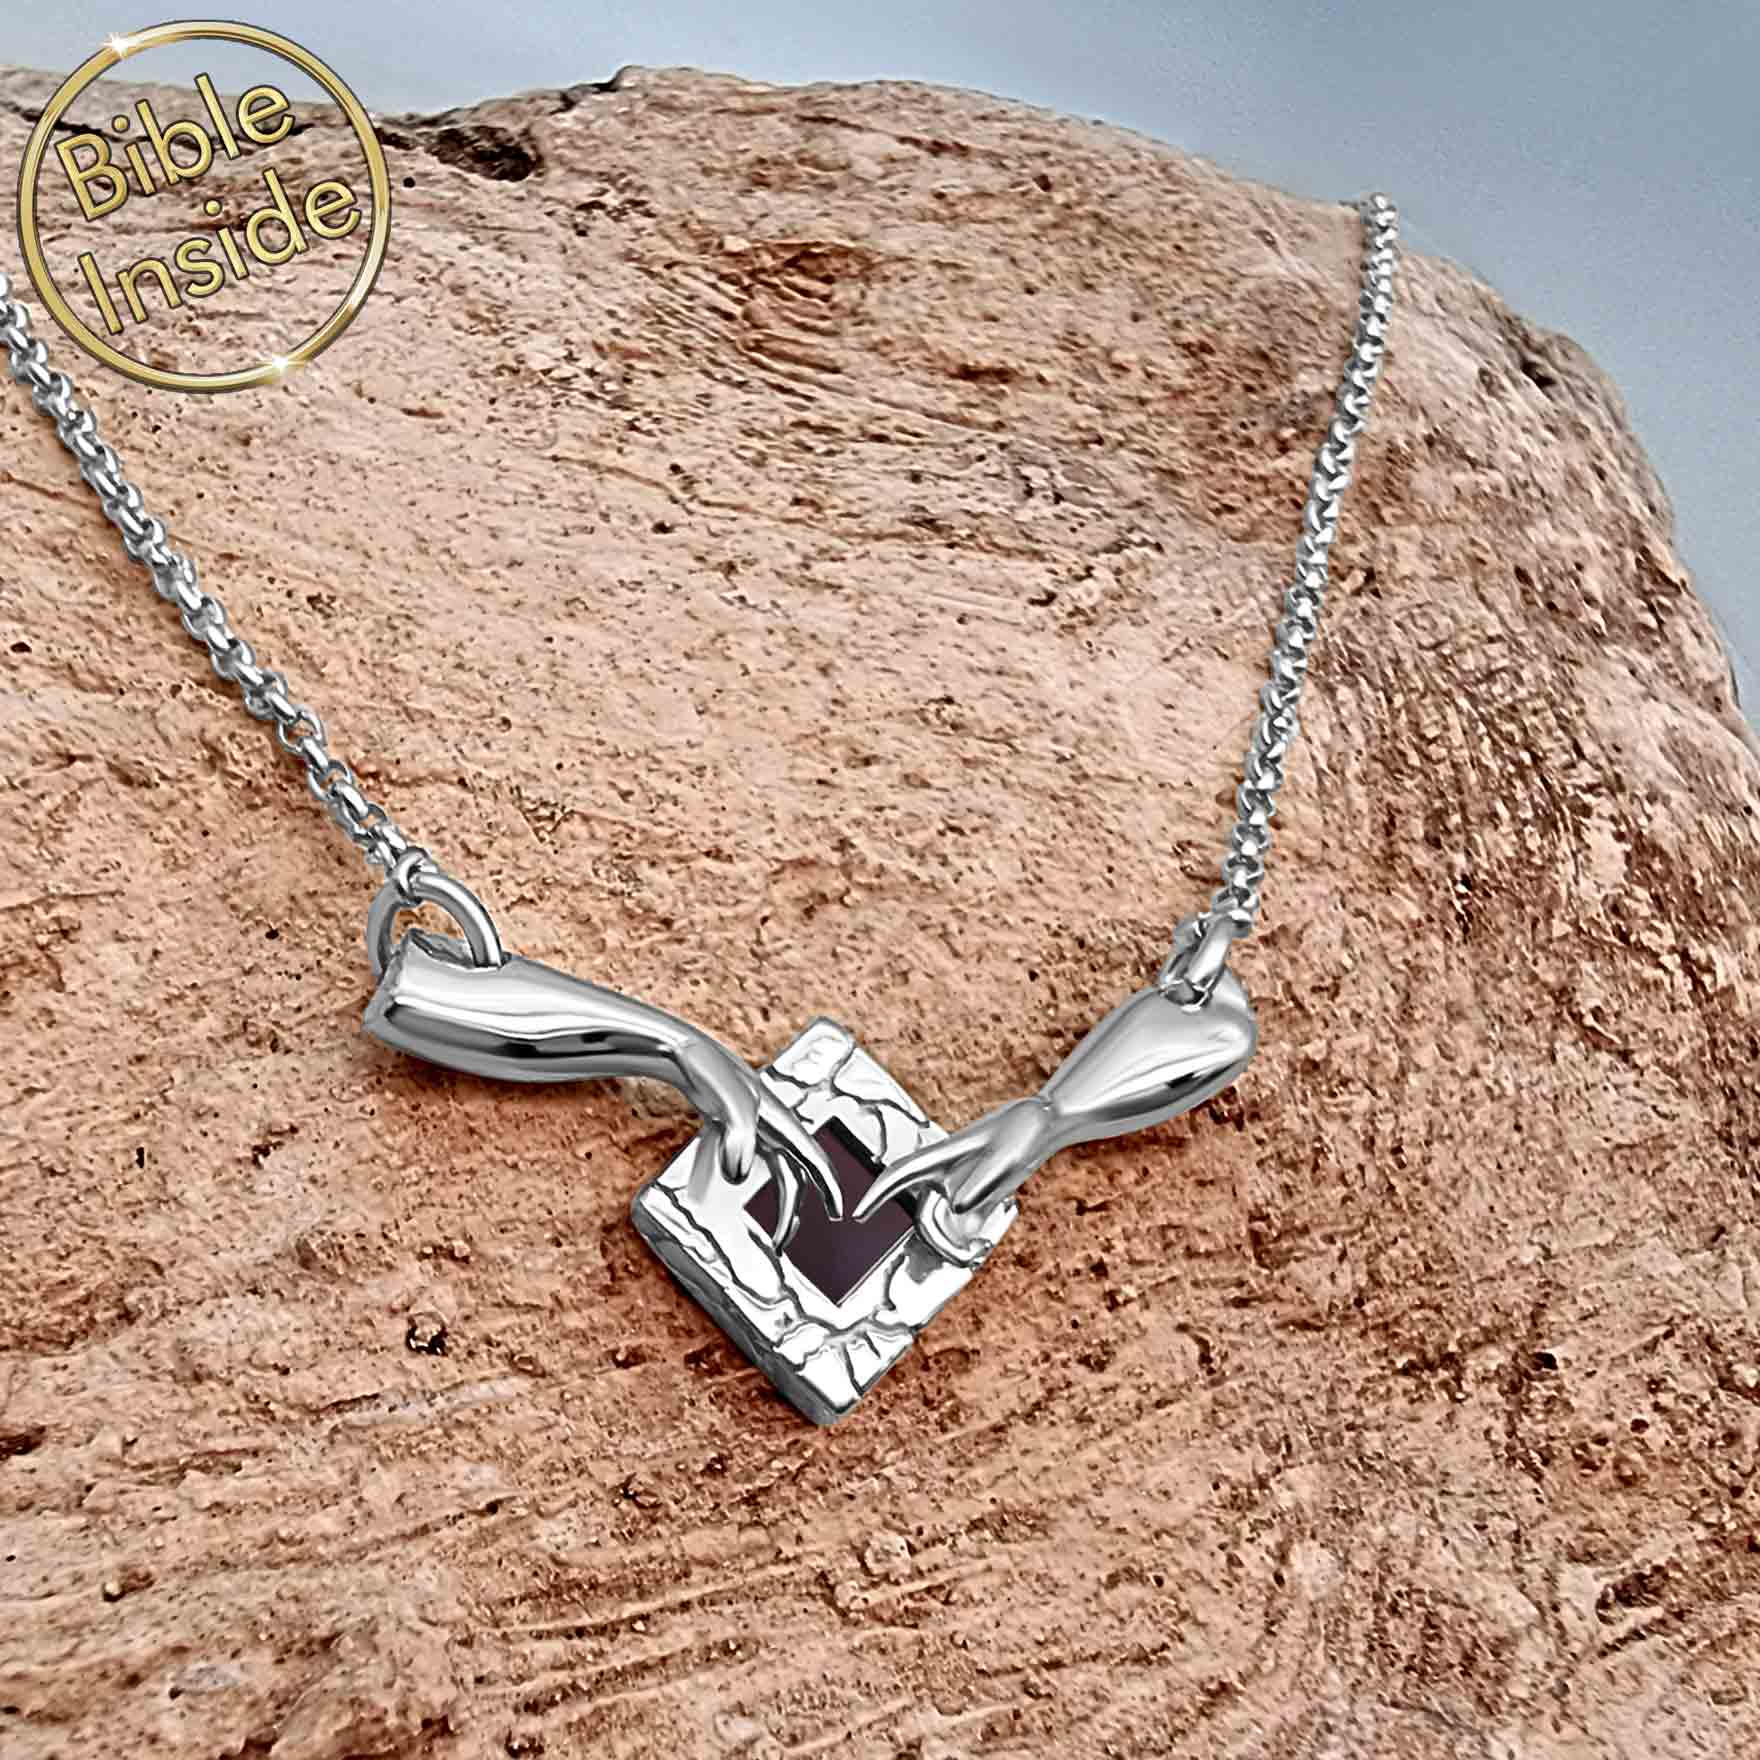 White Gold Bible Necklace - The Creation of Adam with nano Bible - Artizan Nano Jewelry